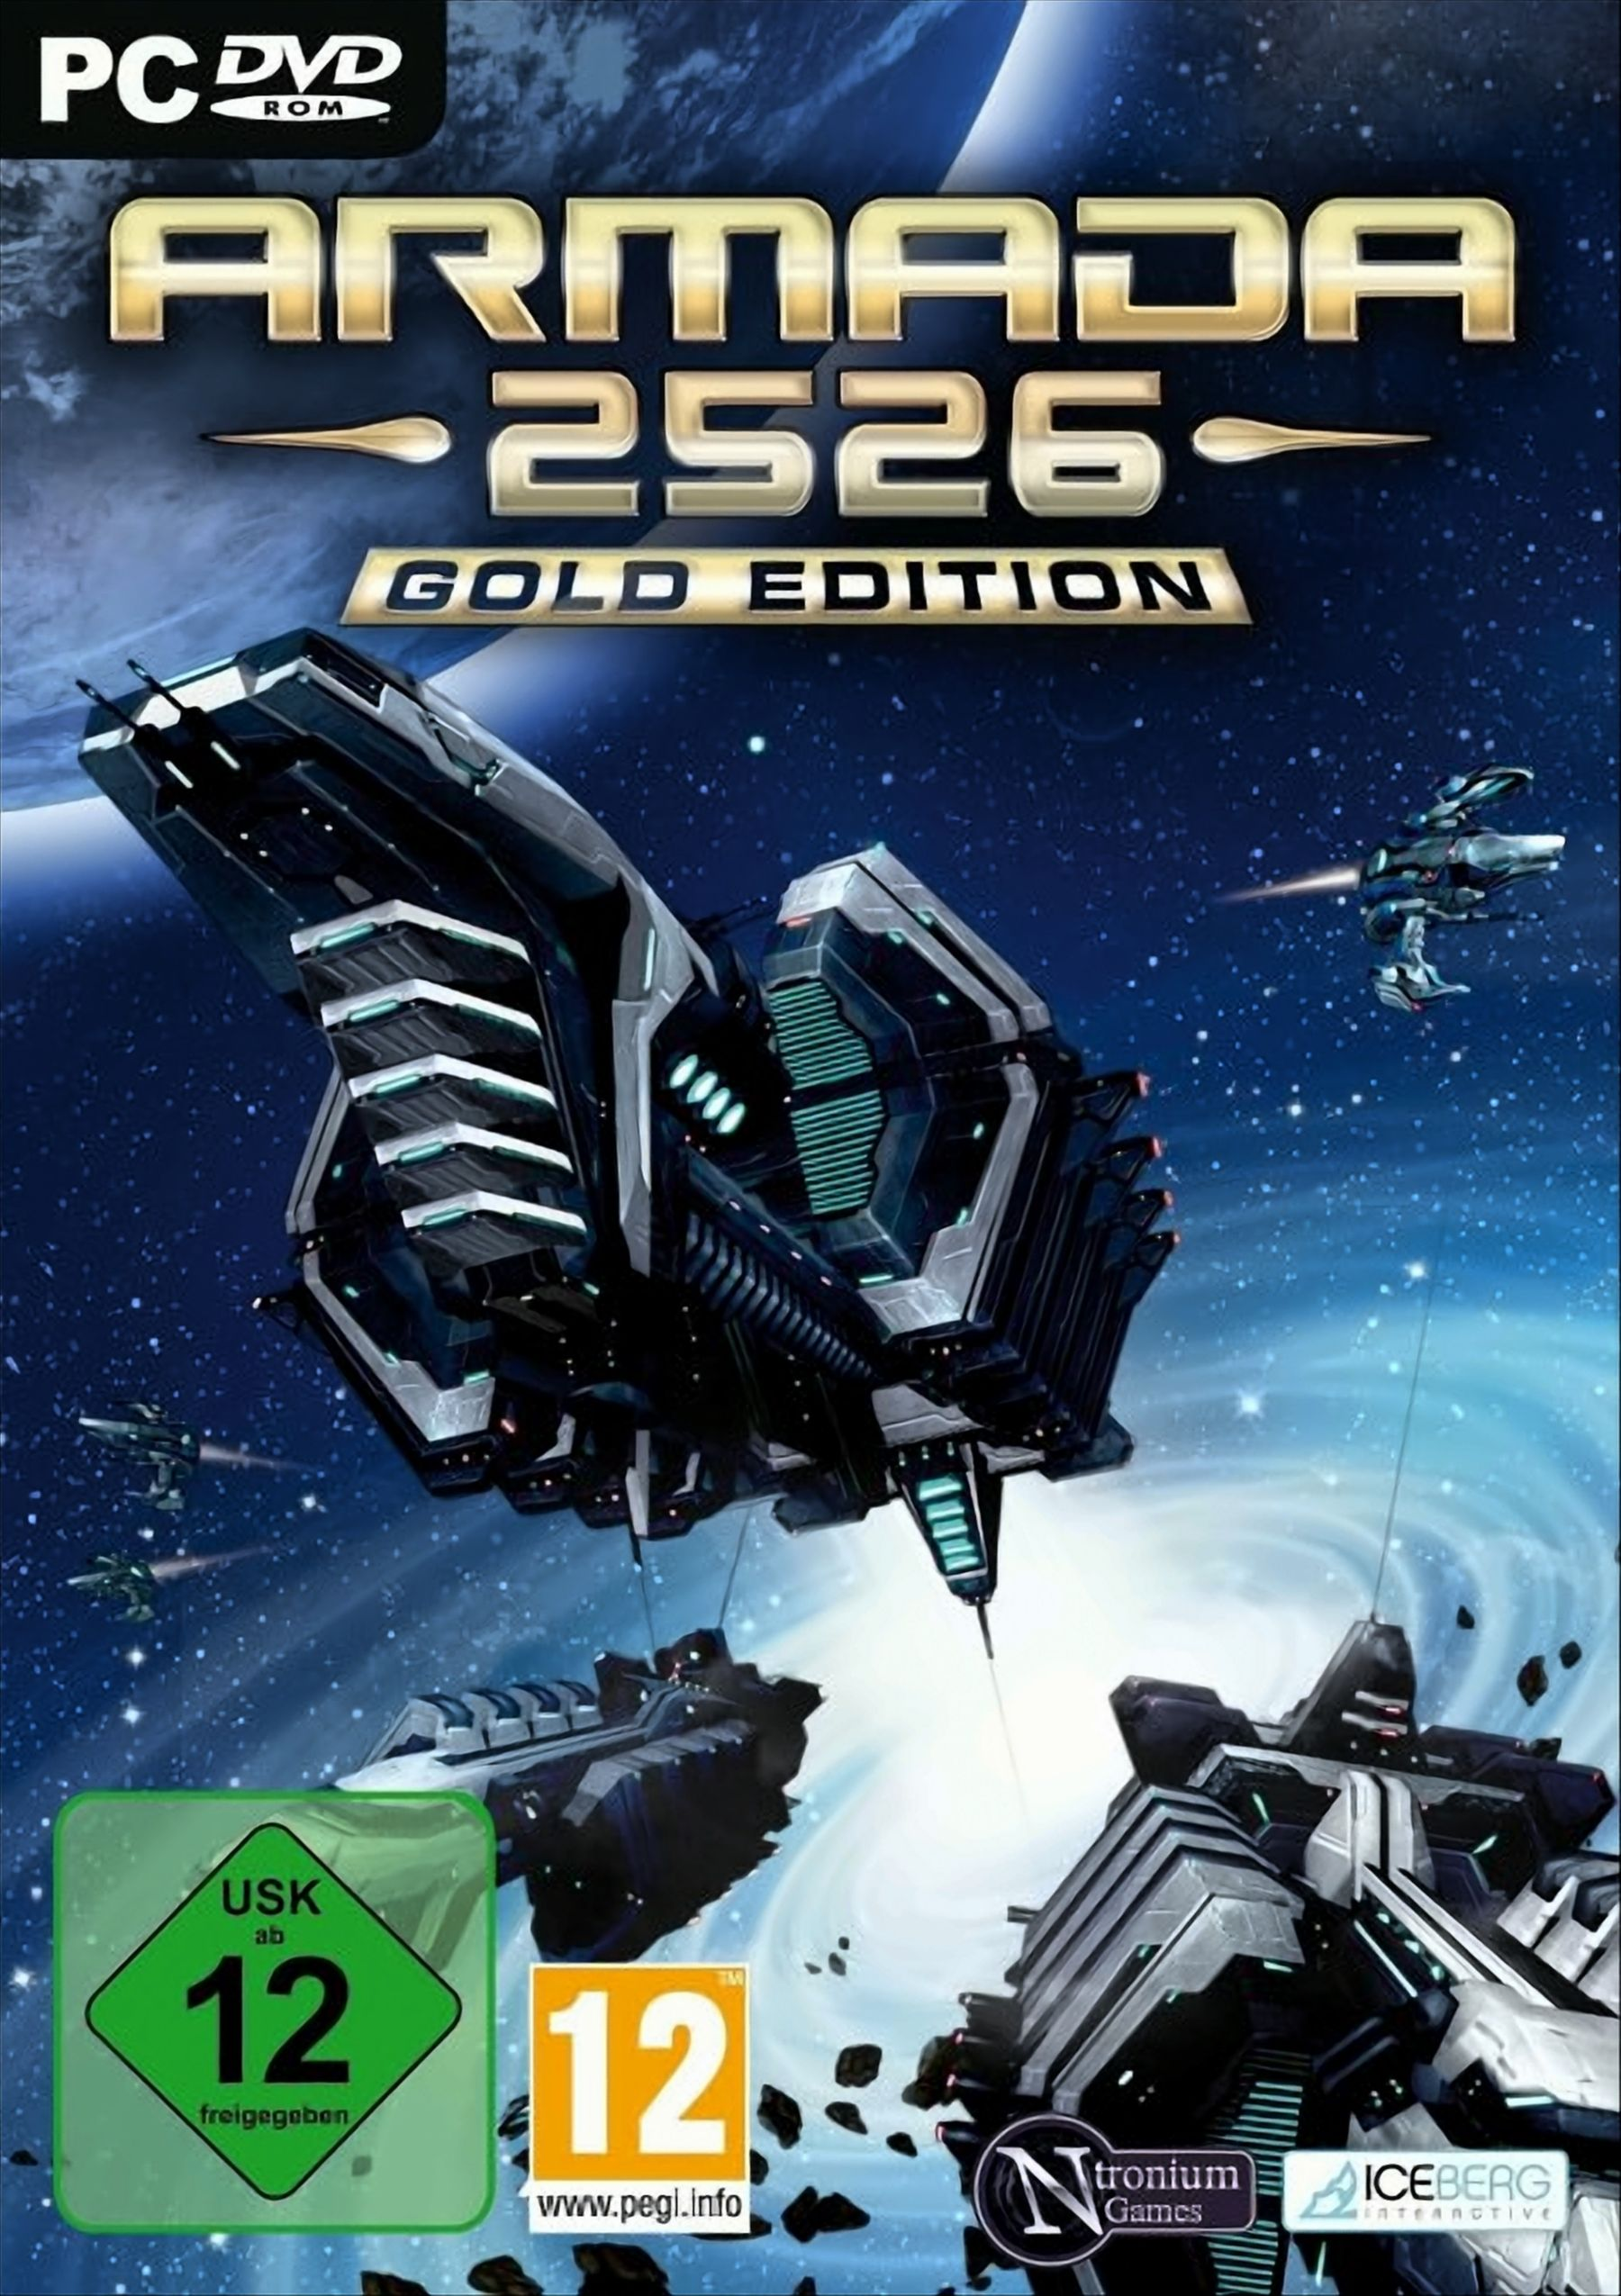 Armada 2526 - Gold - Edition [PC